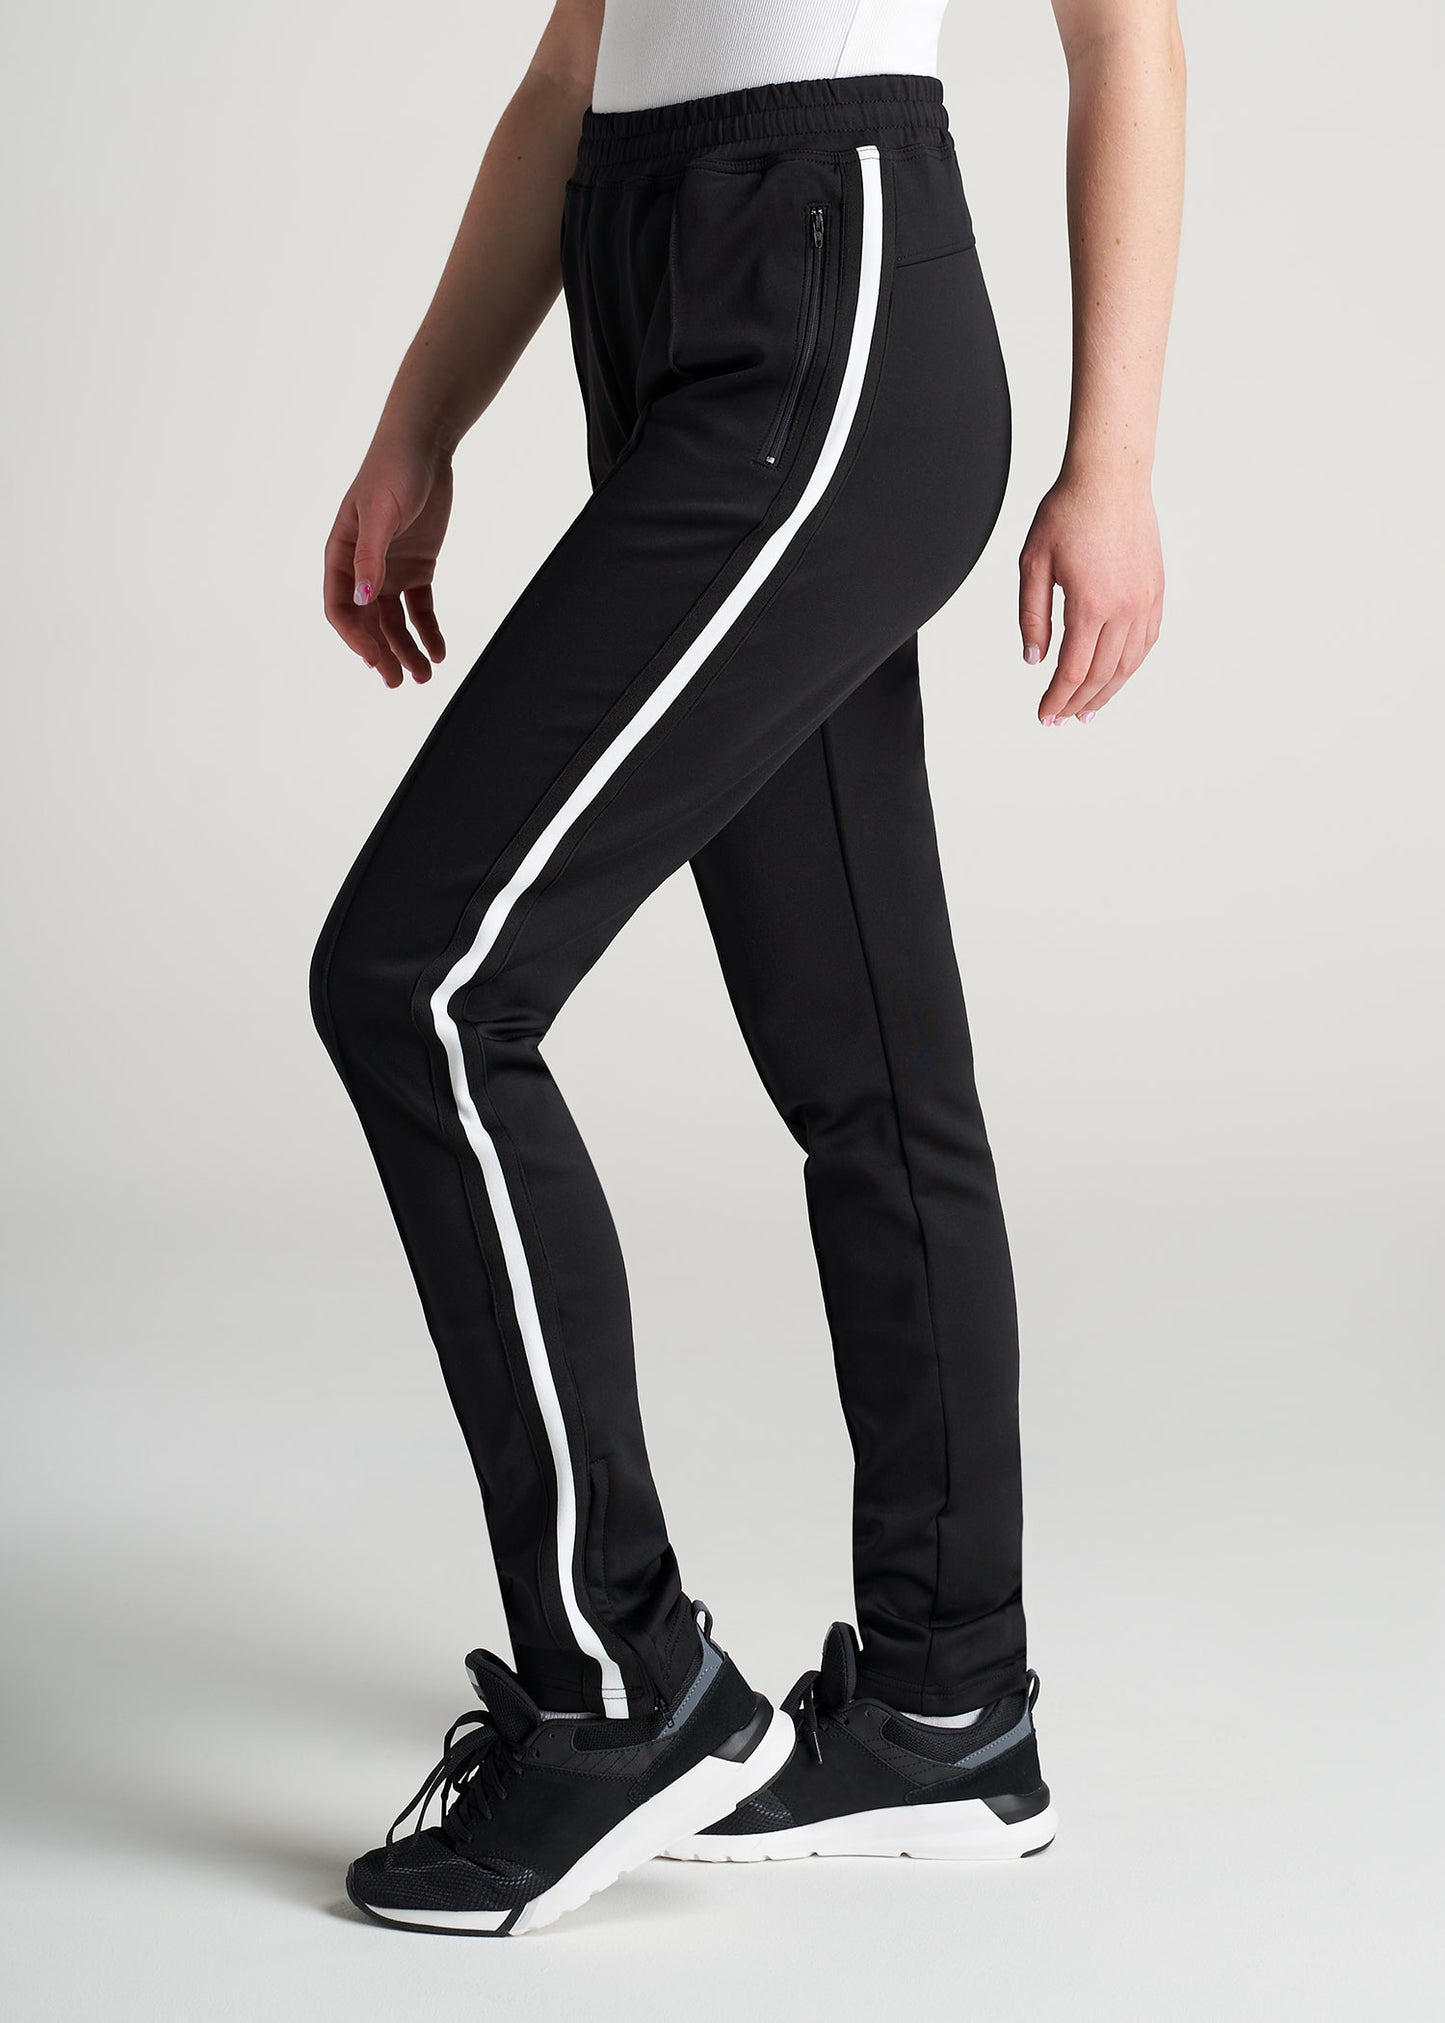 American-Tall-Women-Athletic-StripePant-Black_White-side